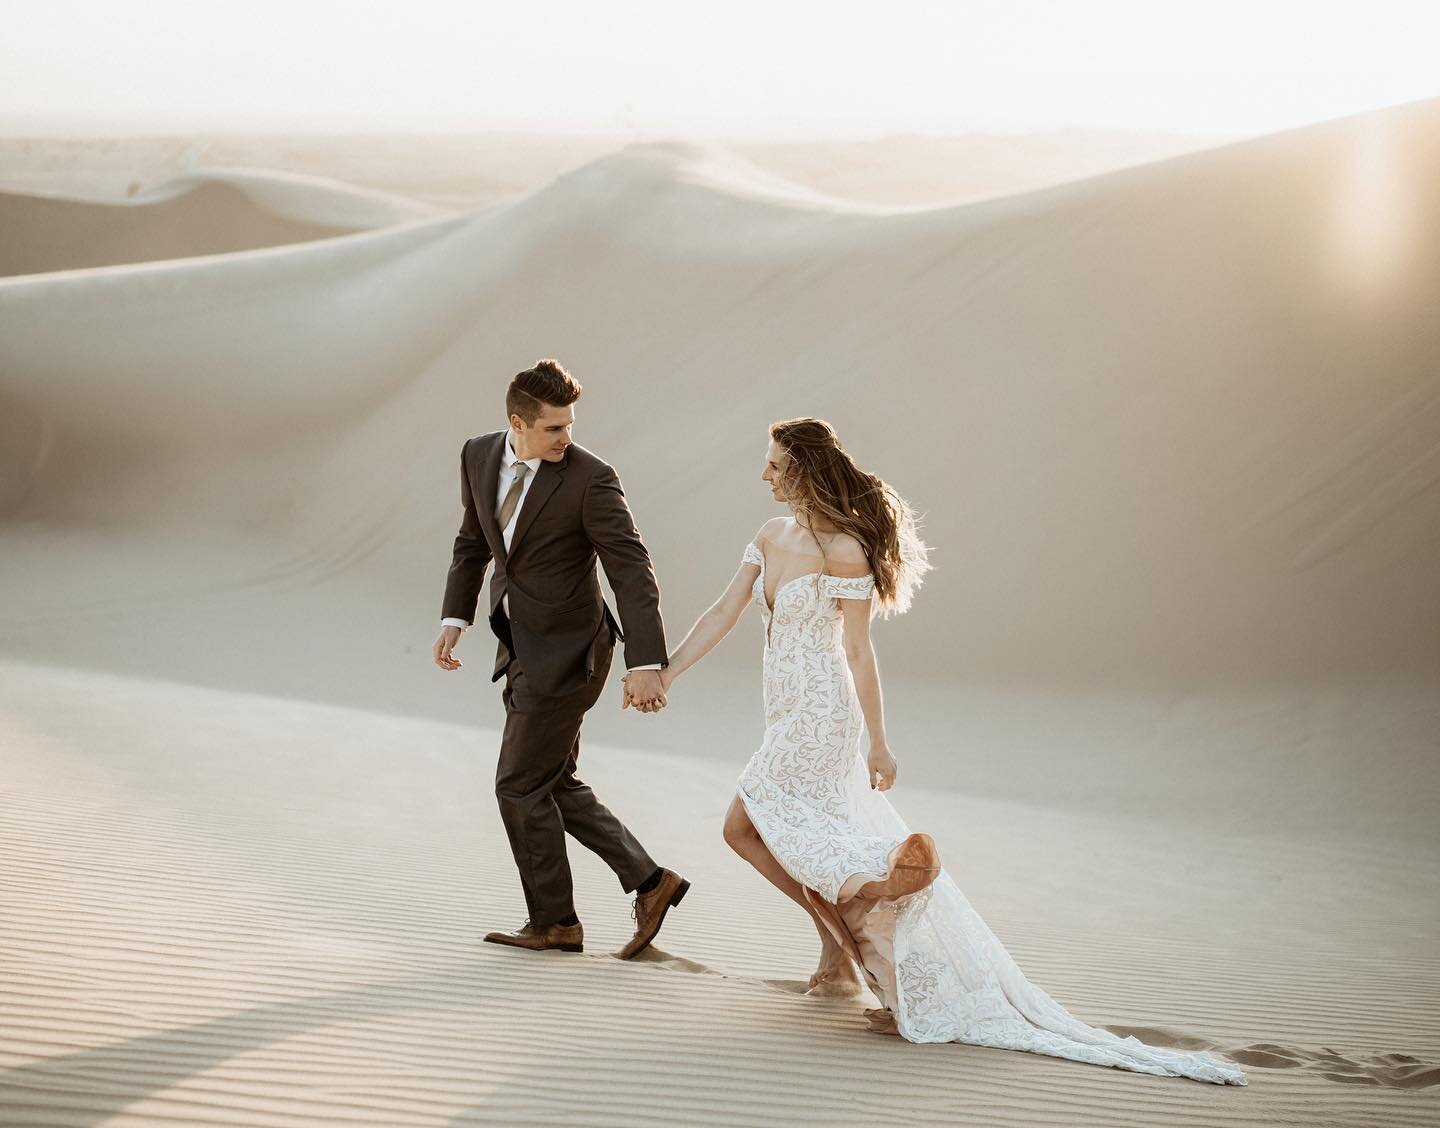 Rylee & Co | Intimate Wedding & Adventure Elopement Photographer